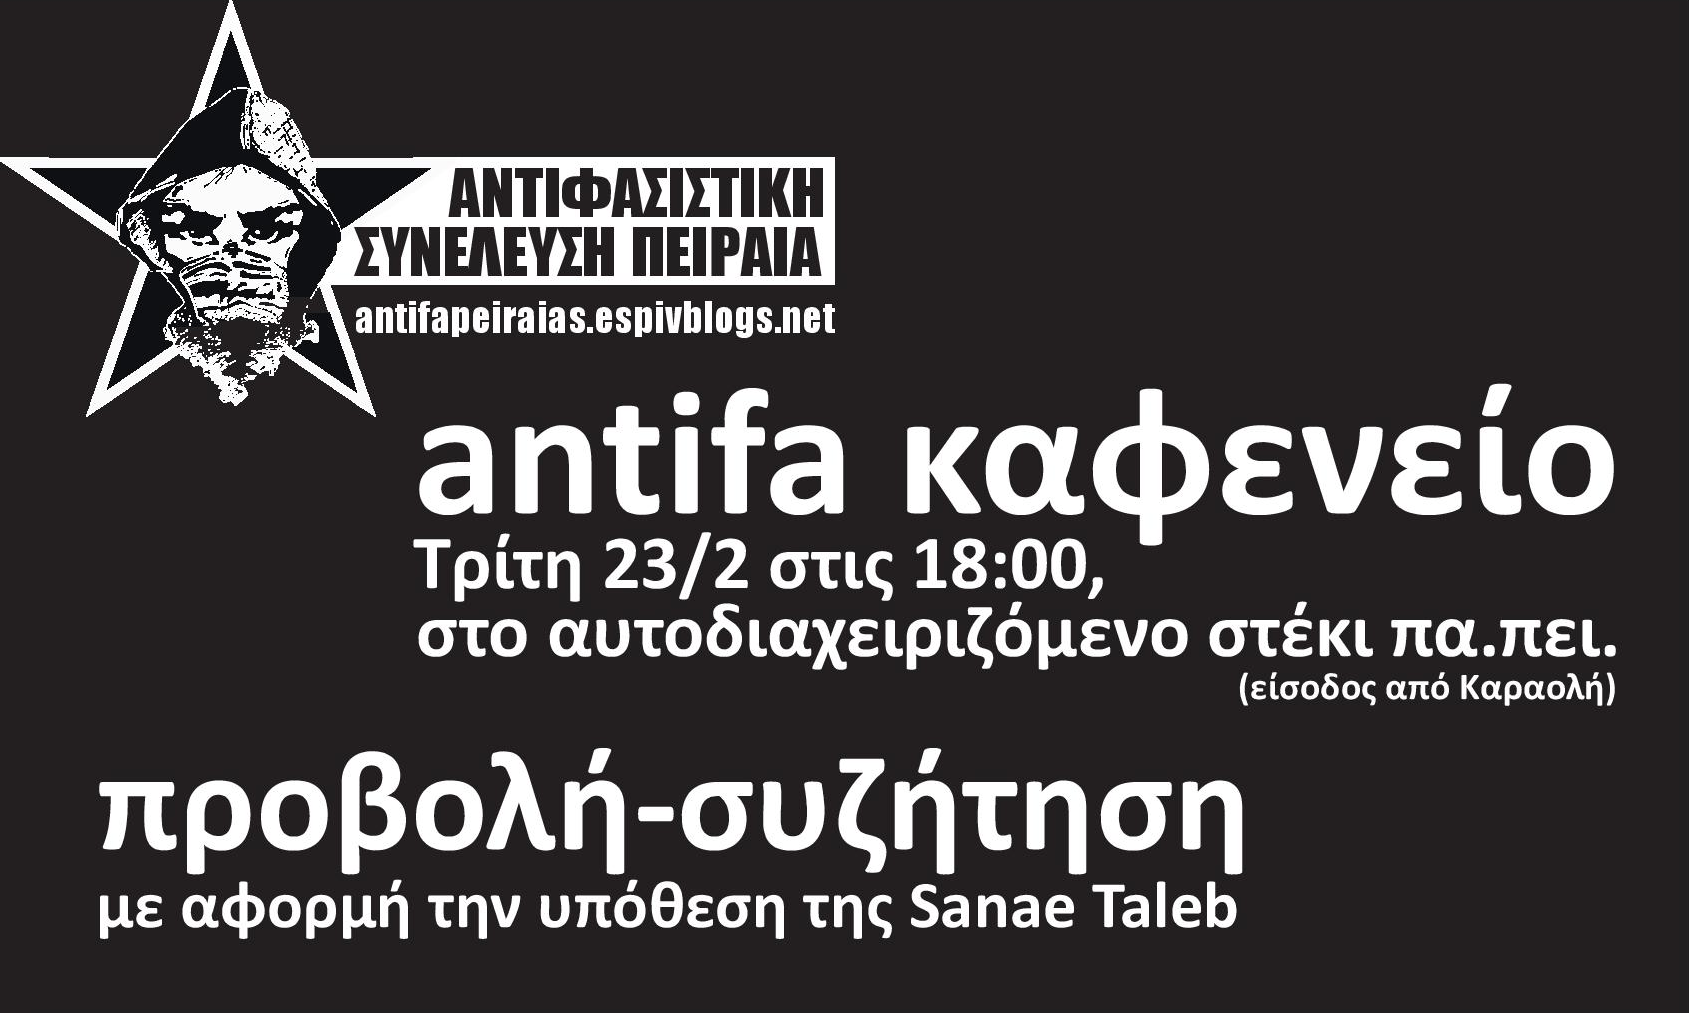 Antifa καφενείο: Τρίτη 23/2 – Προβολή και συζήτηση με αφορμή τον αγώνα της Σάναα Τάλεμπ